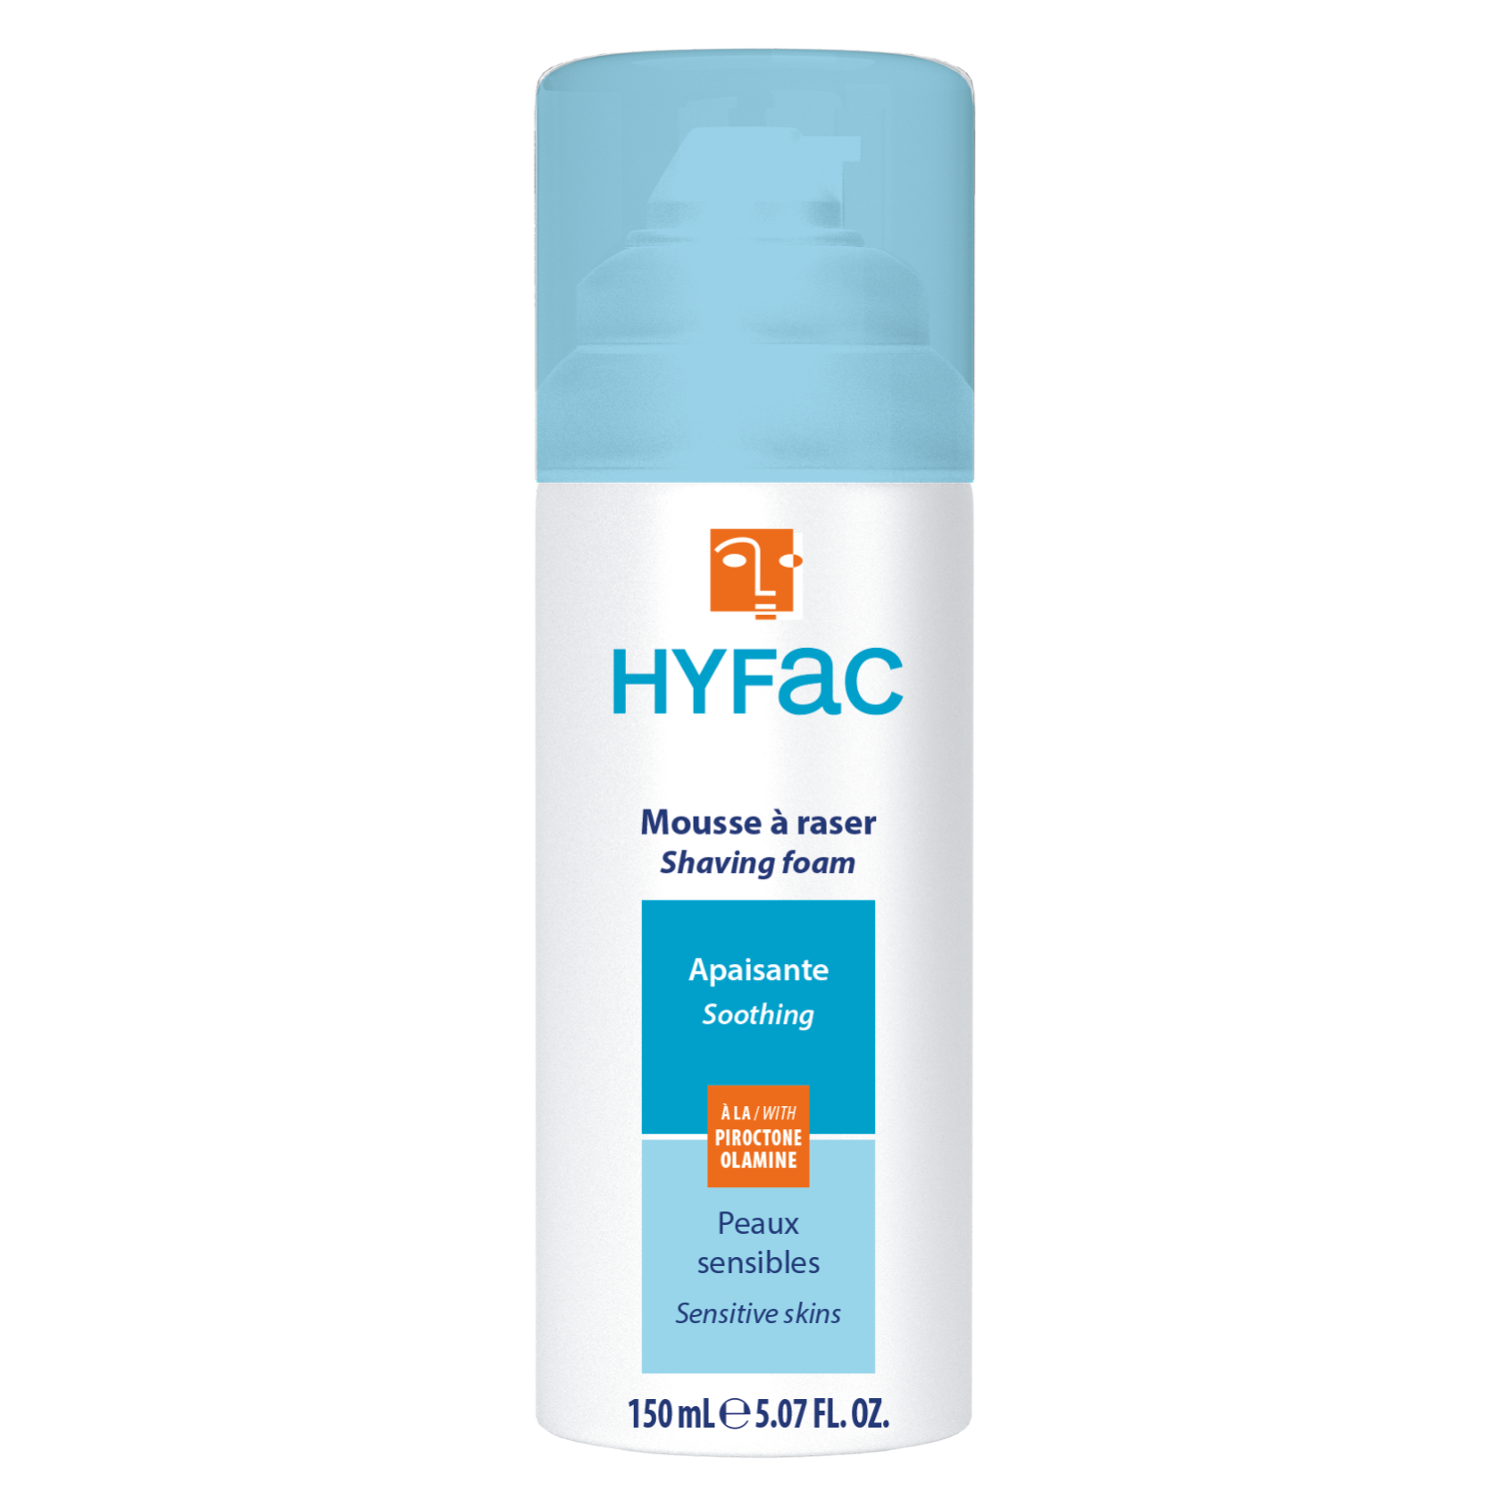 HYFAC Soothing Shaving Foam for Sensitive Skin